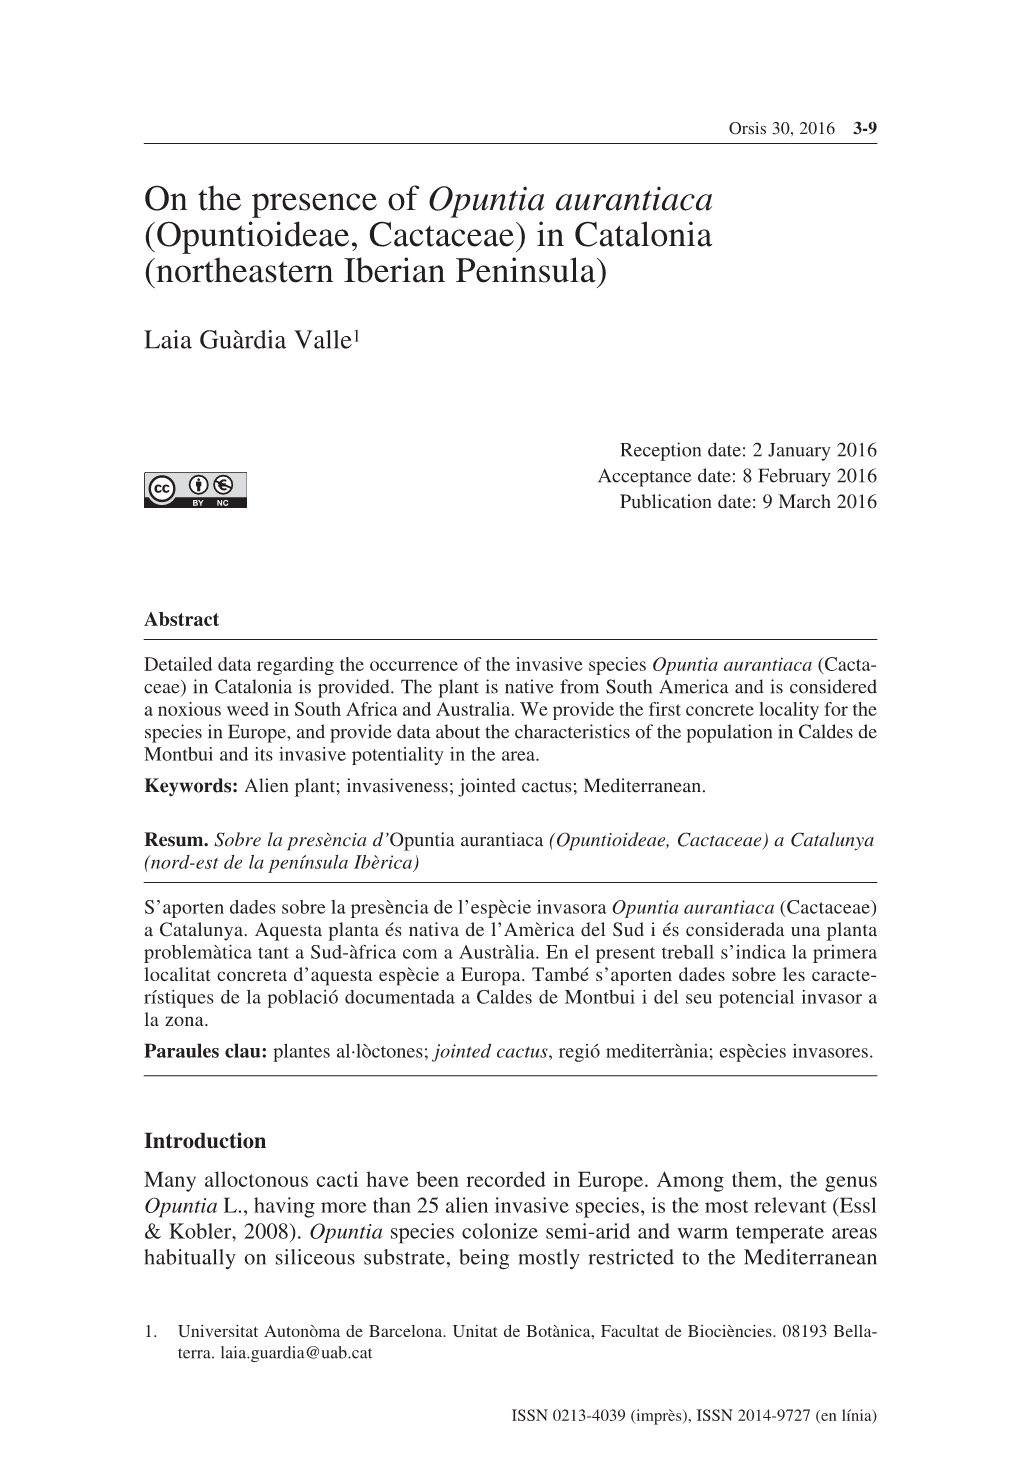 On the Presence of Opuntia Aurantiaca (Opuntioideae, Cactaceae) in Catalonia (Northeastern Iberian Peninsula)